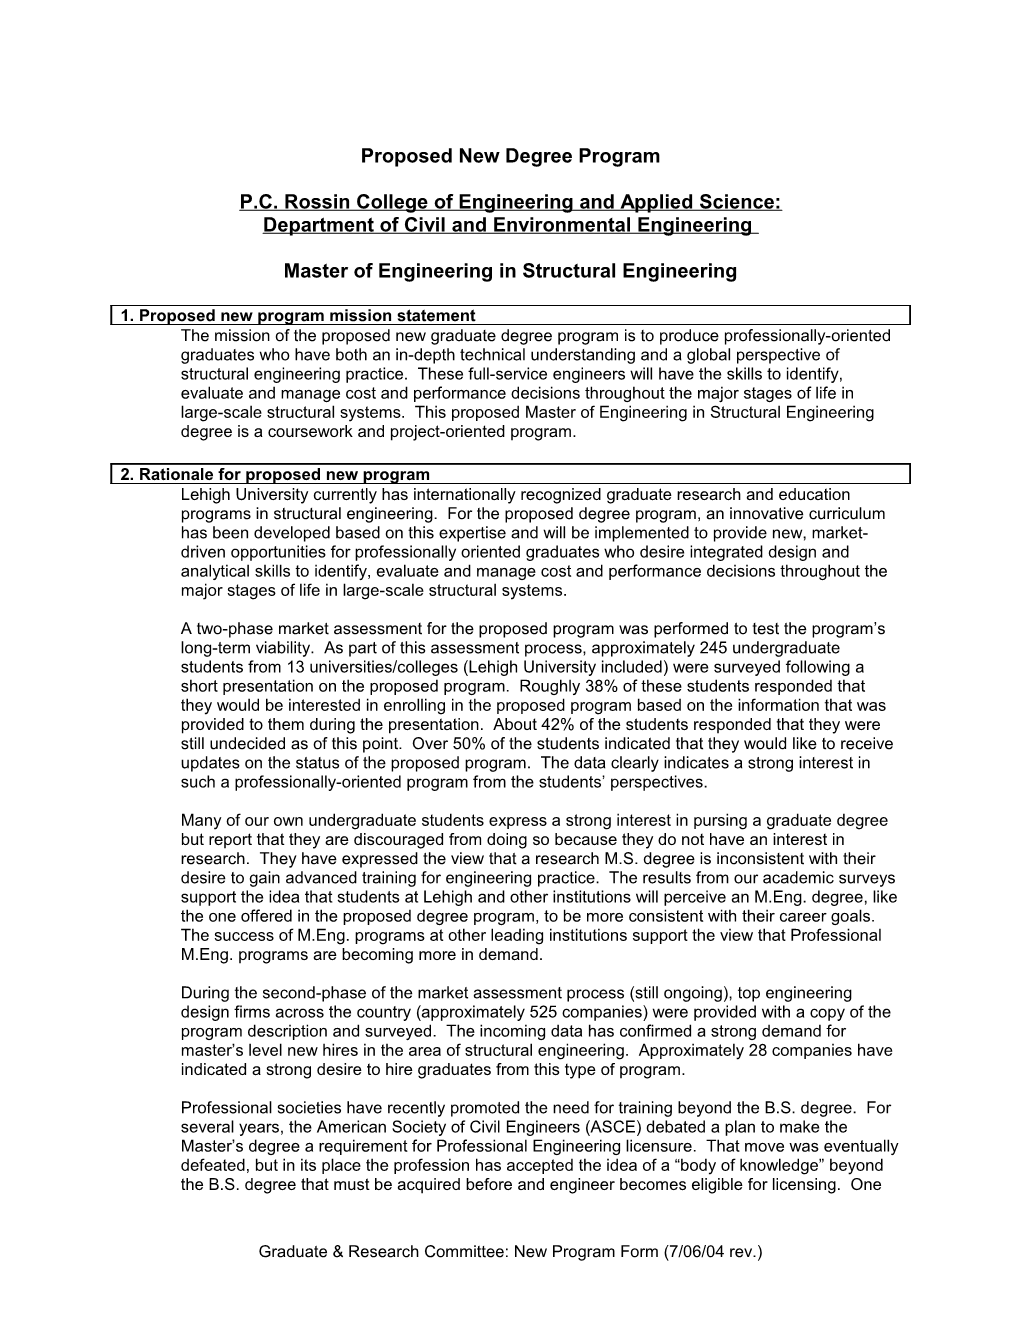 GRC New Degree Program Proposal Form